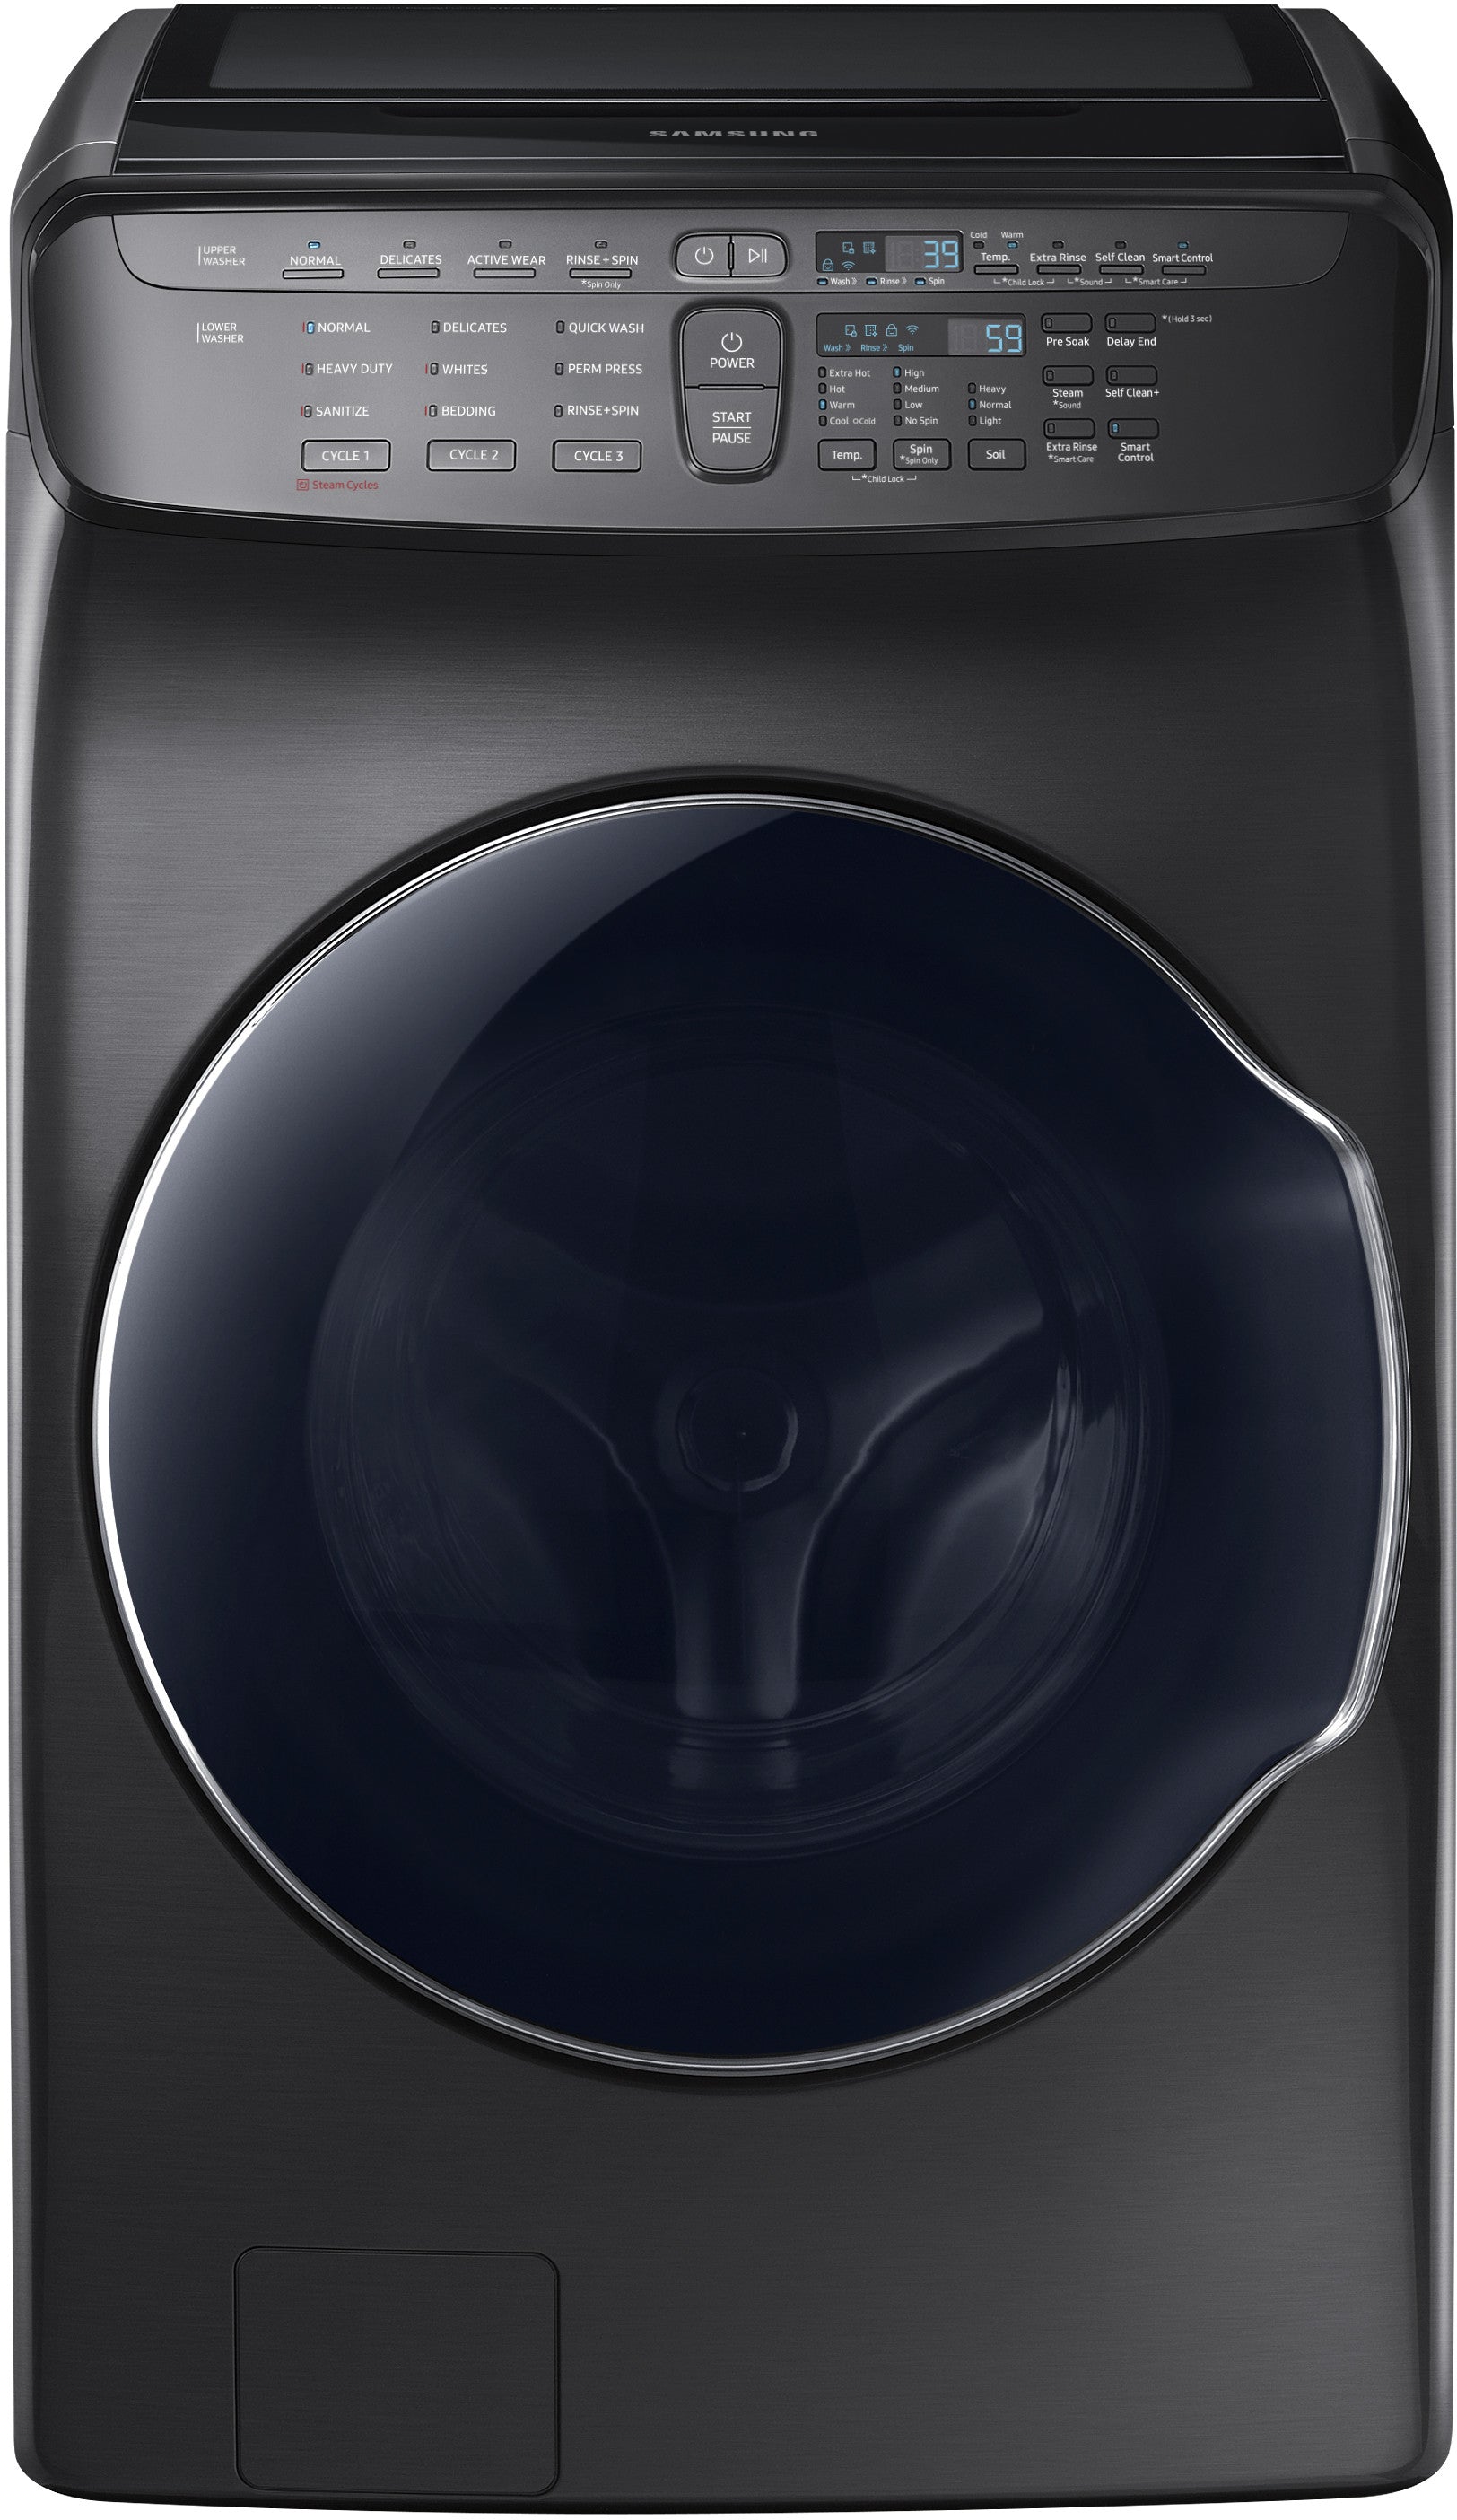 WV55M9600AV by Samsung - 5.5 cu. ft. Smart Washer with FlexWash